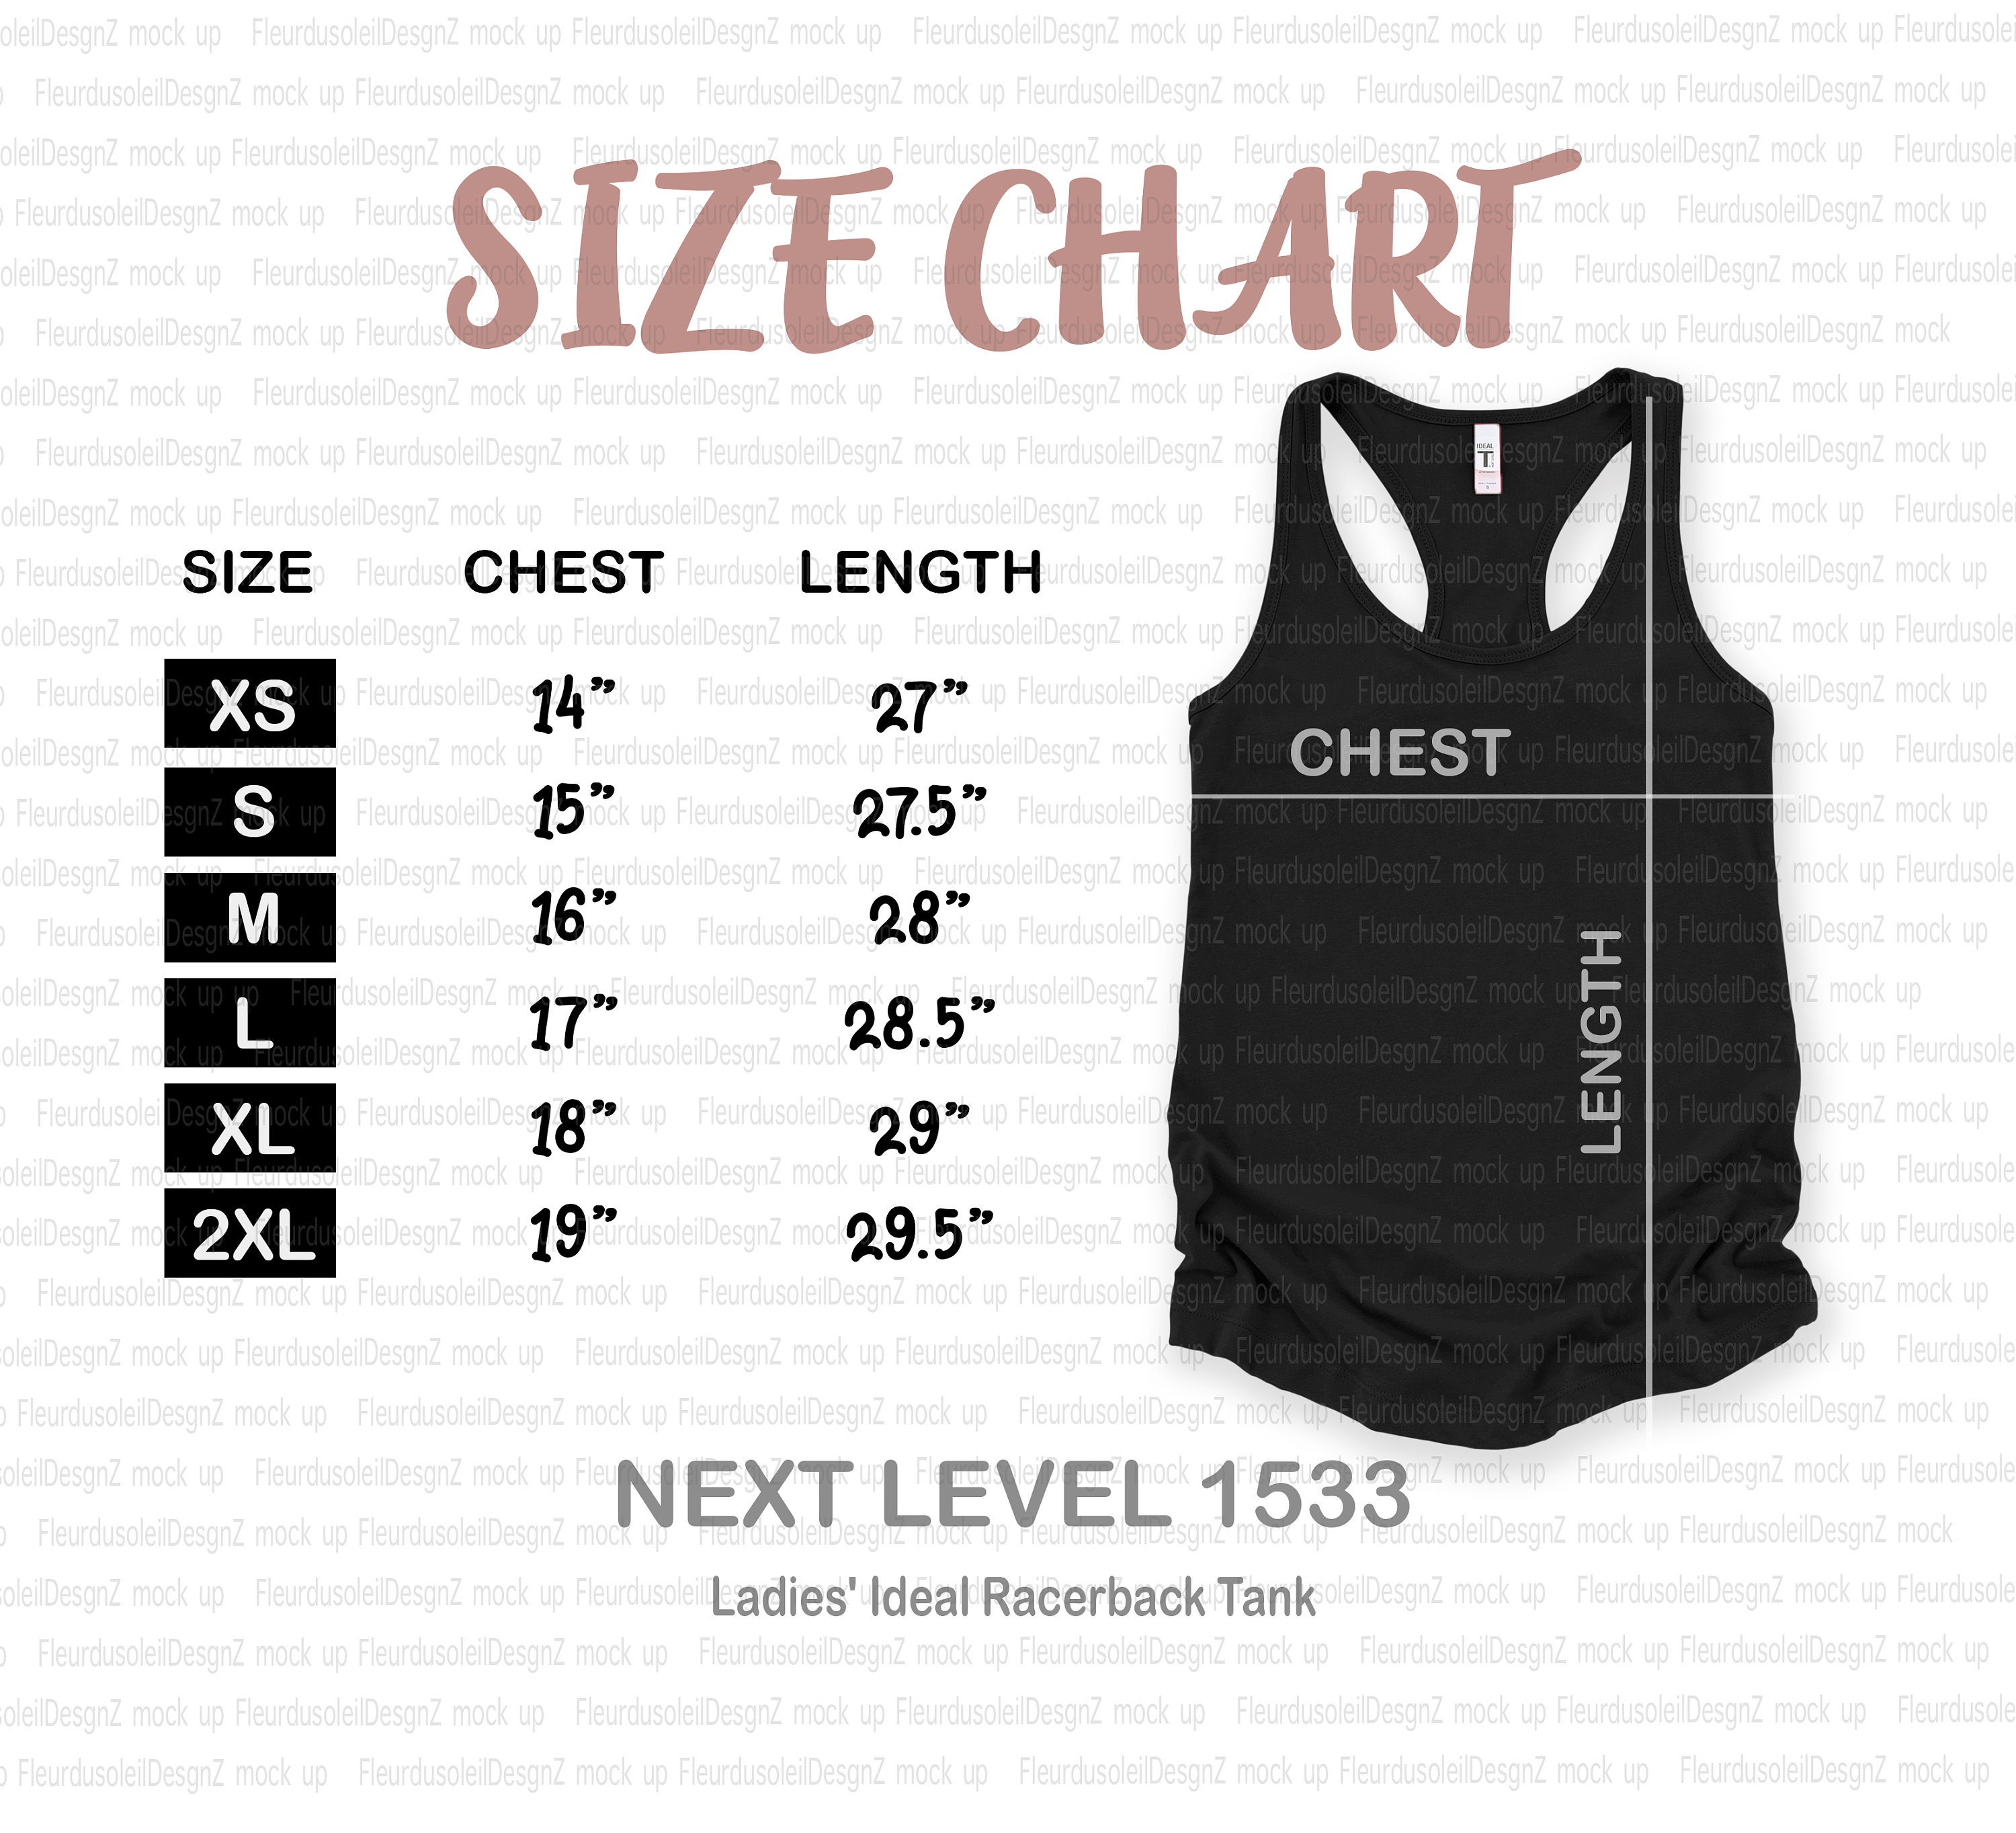 Next Level Size Chart Next Level 1533 Size Chart NEXT LEVEL Mockup